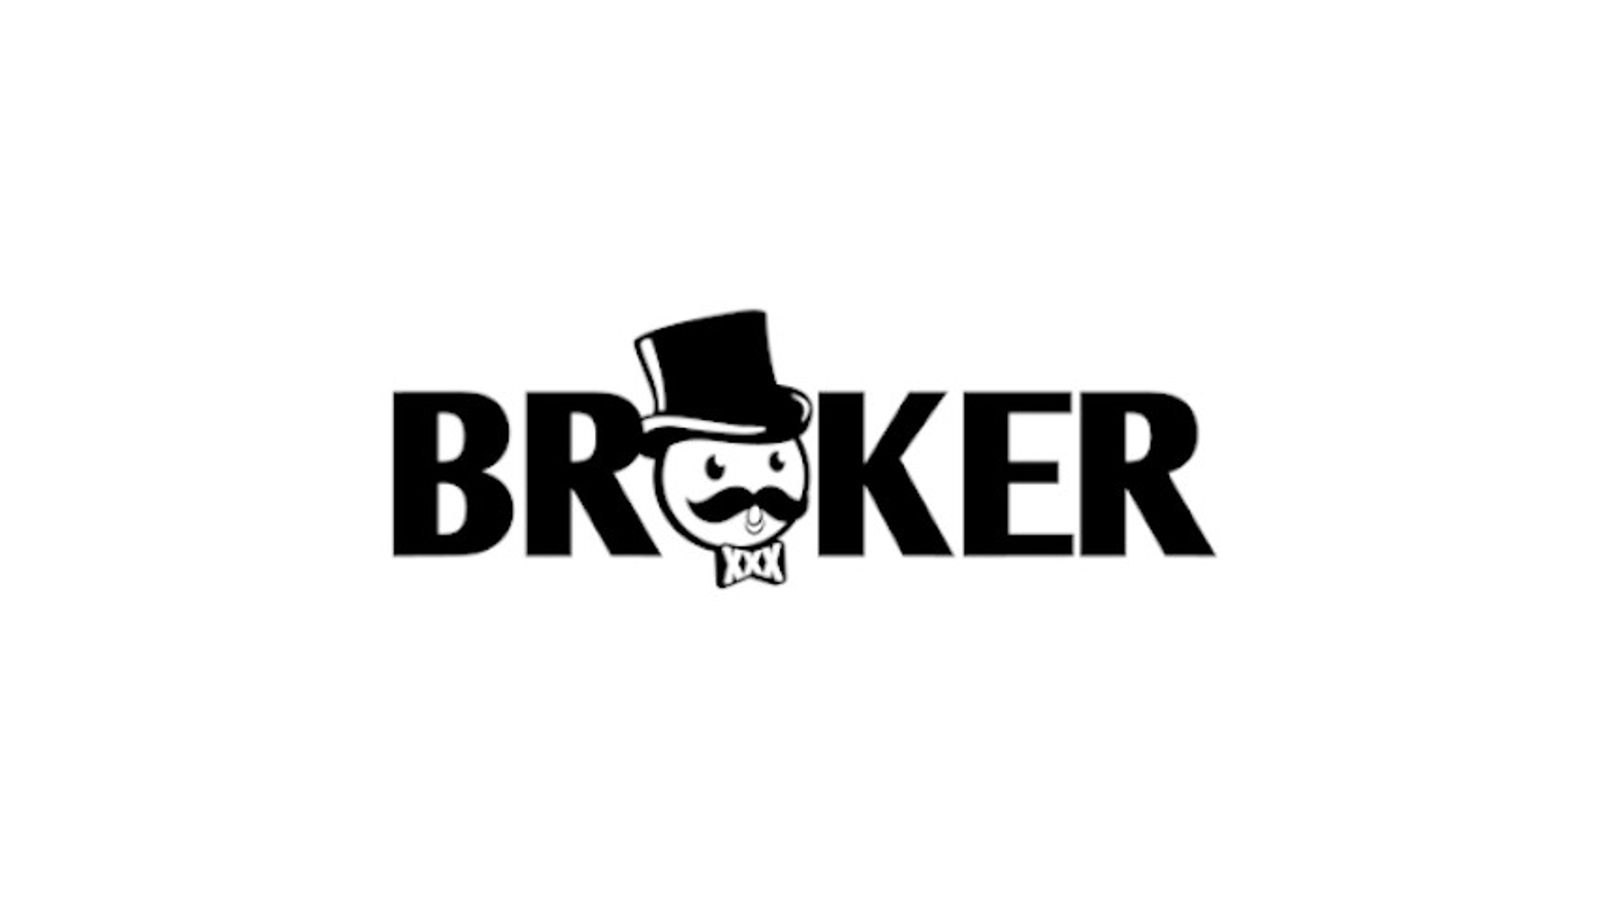 Broker.xxx Launches Domain Marketplace